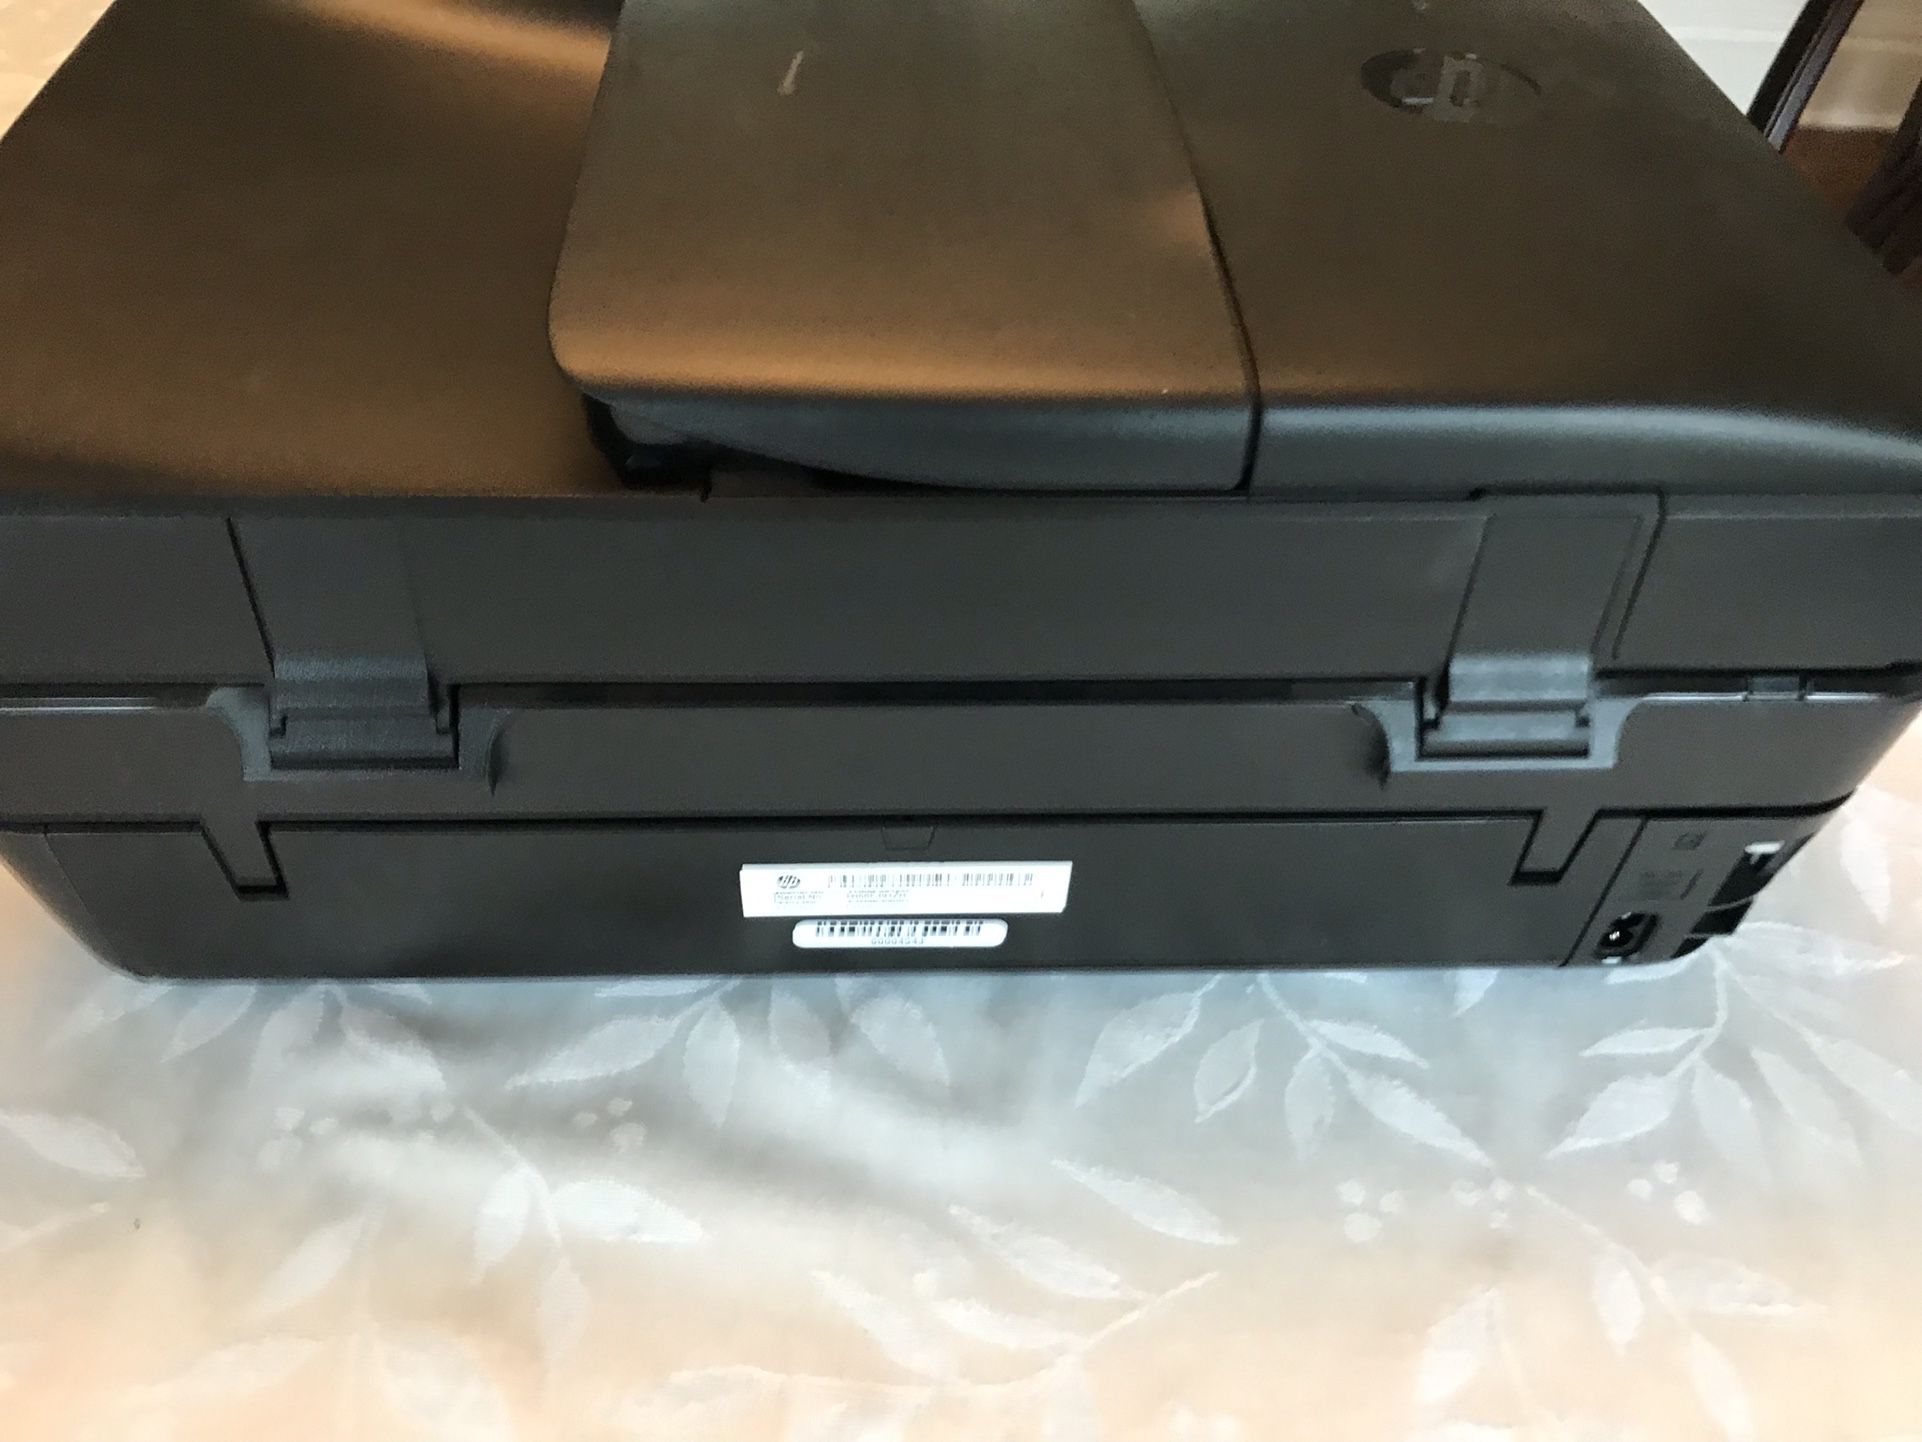 HP Deskjet 2547 for Sale in Cold Spring Harbor, NY - OfferUp